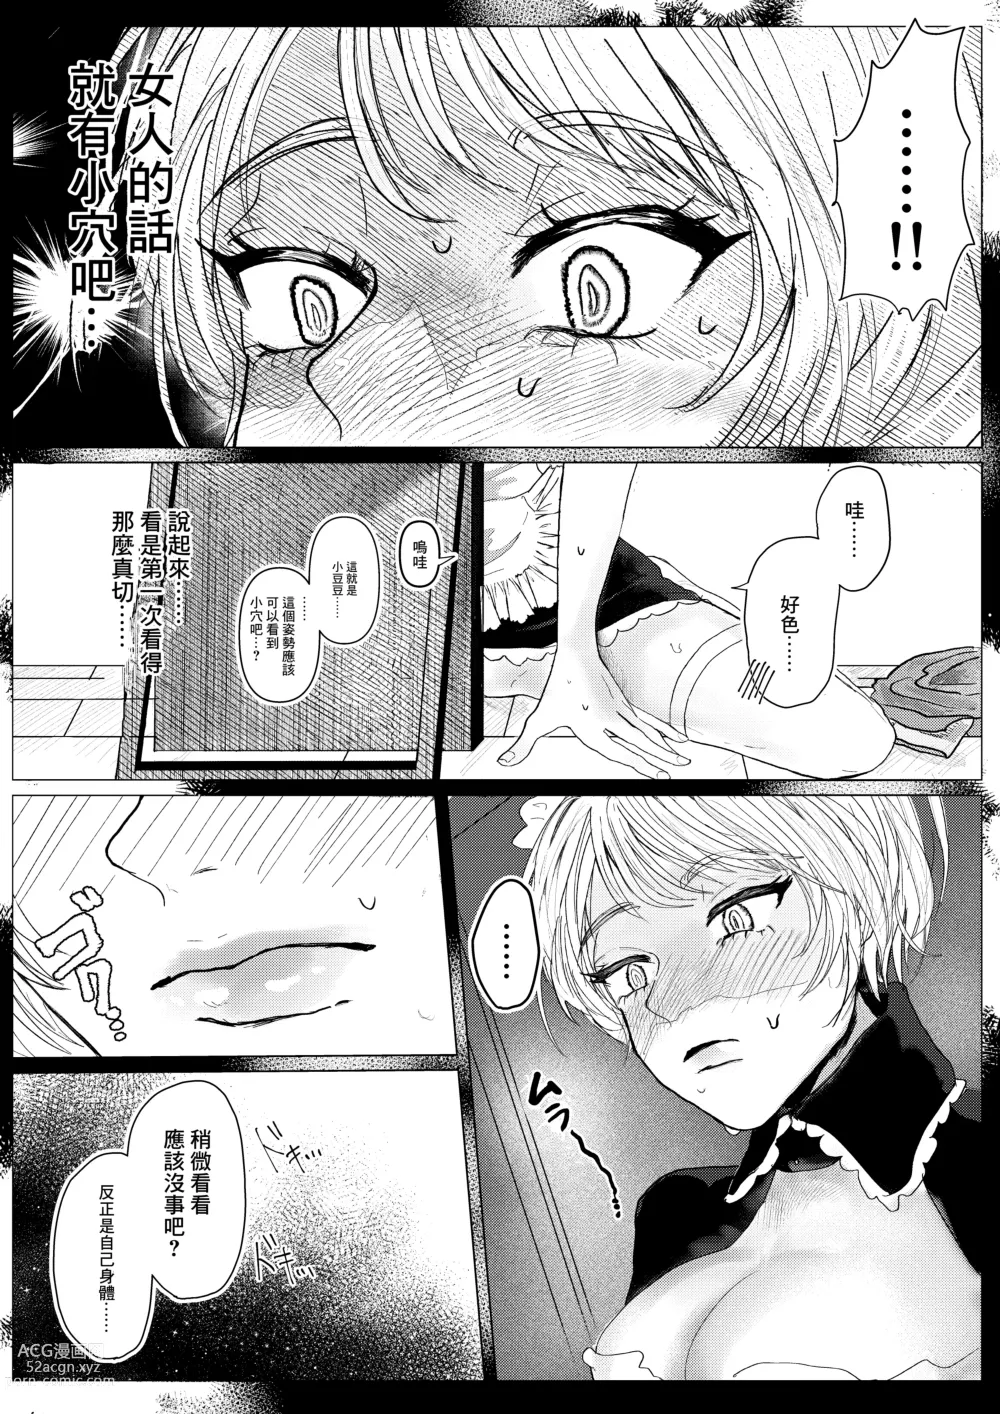 Page 7 of doujinshi Shingata!? TS Virus